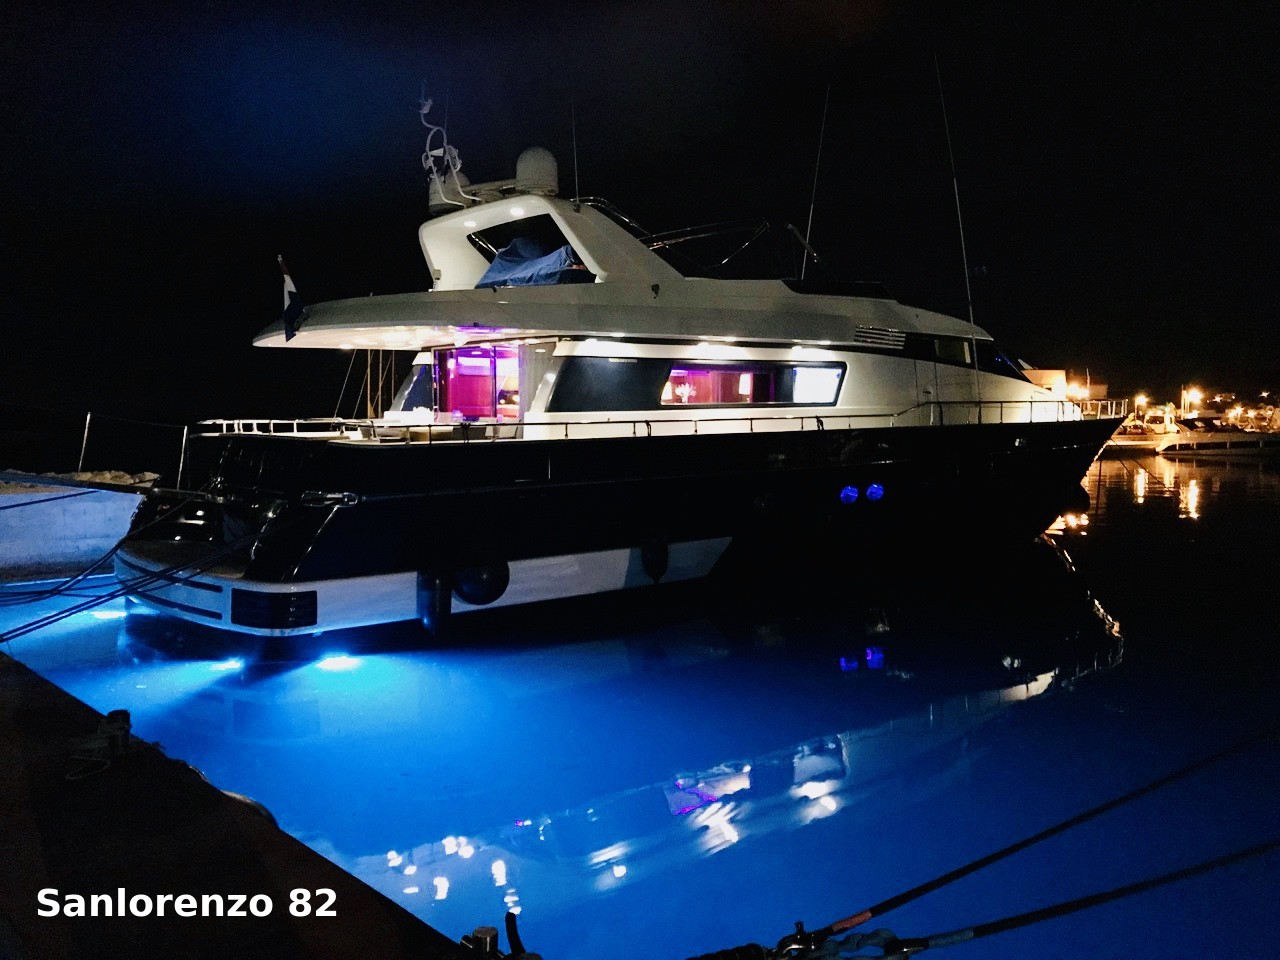 Sanlorenzo 82 Yacht - image 1